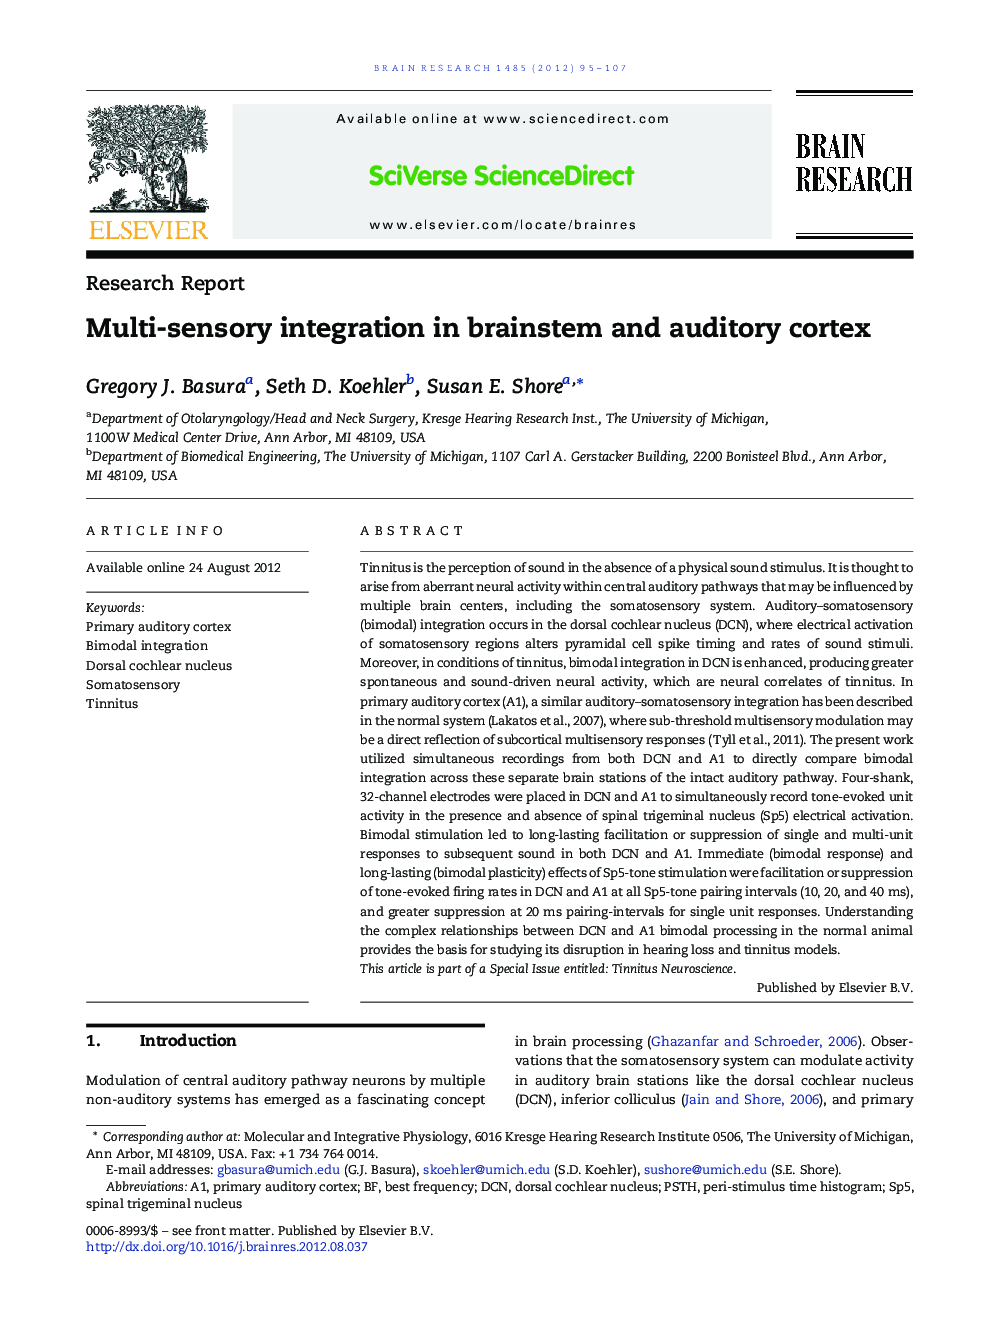 Multi-sensory integration in brainstem and auditory cortex